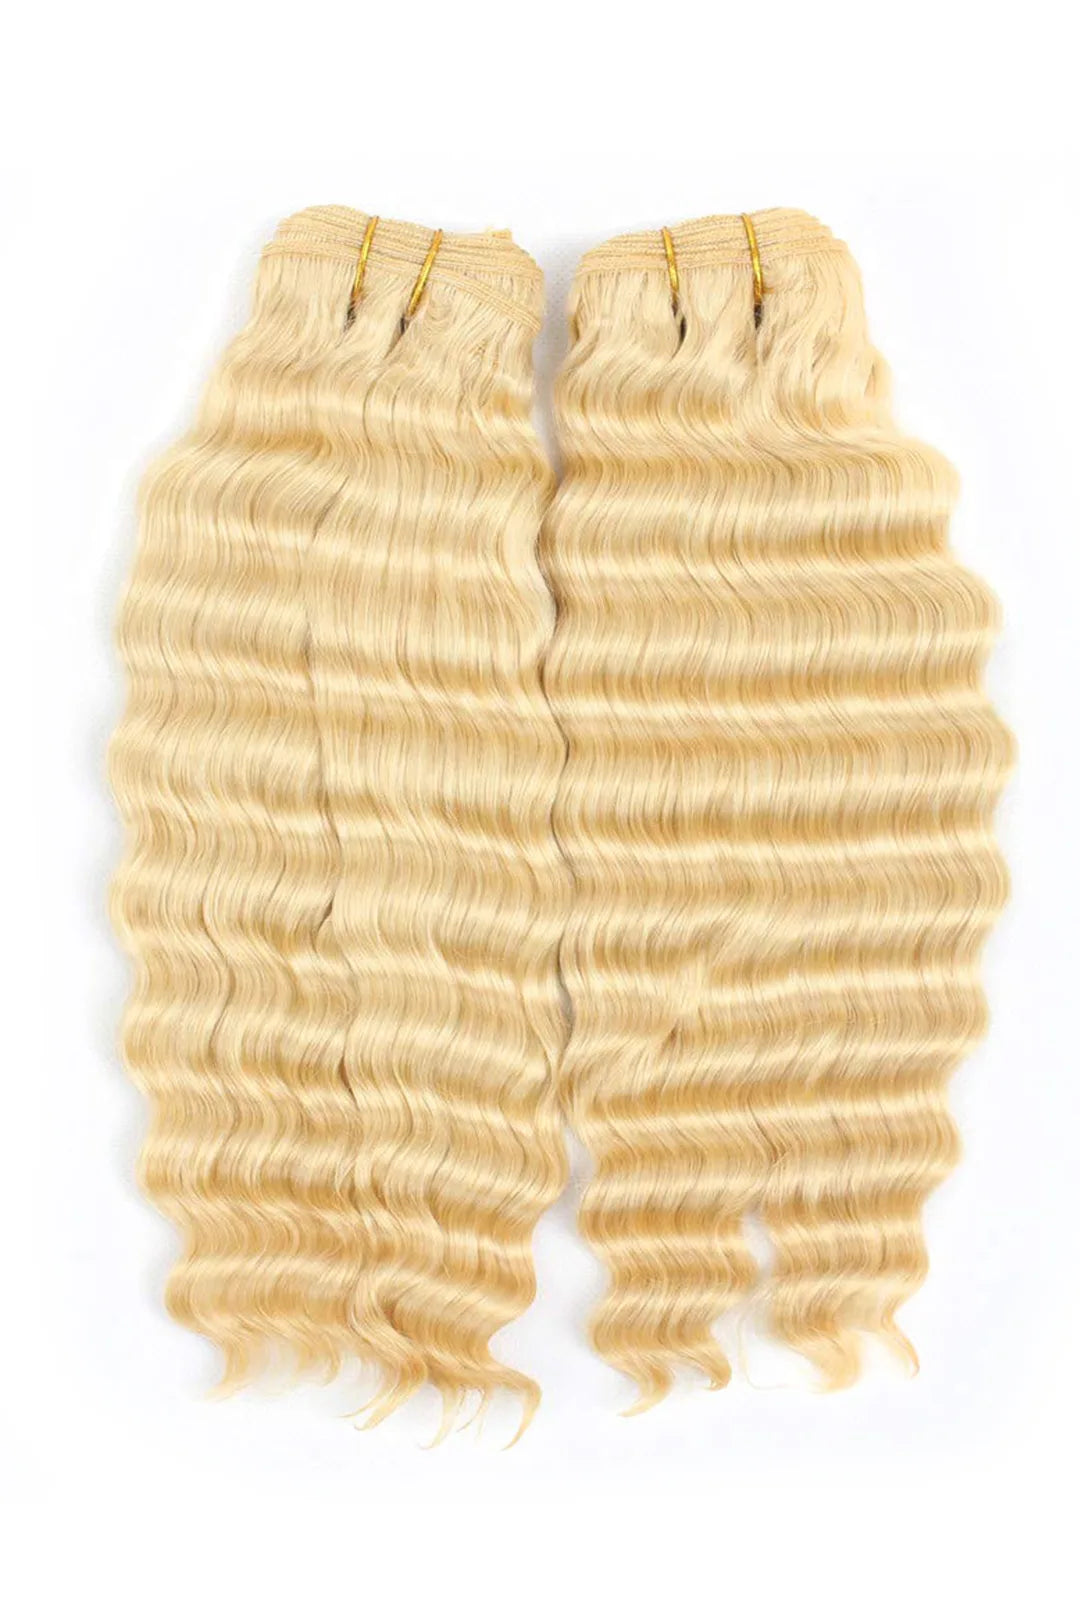 613 Blonde Deep Wave Bundle Double Weft Sew-in Extensions Virgin Hair